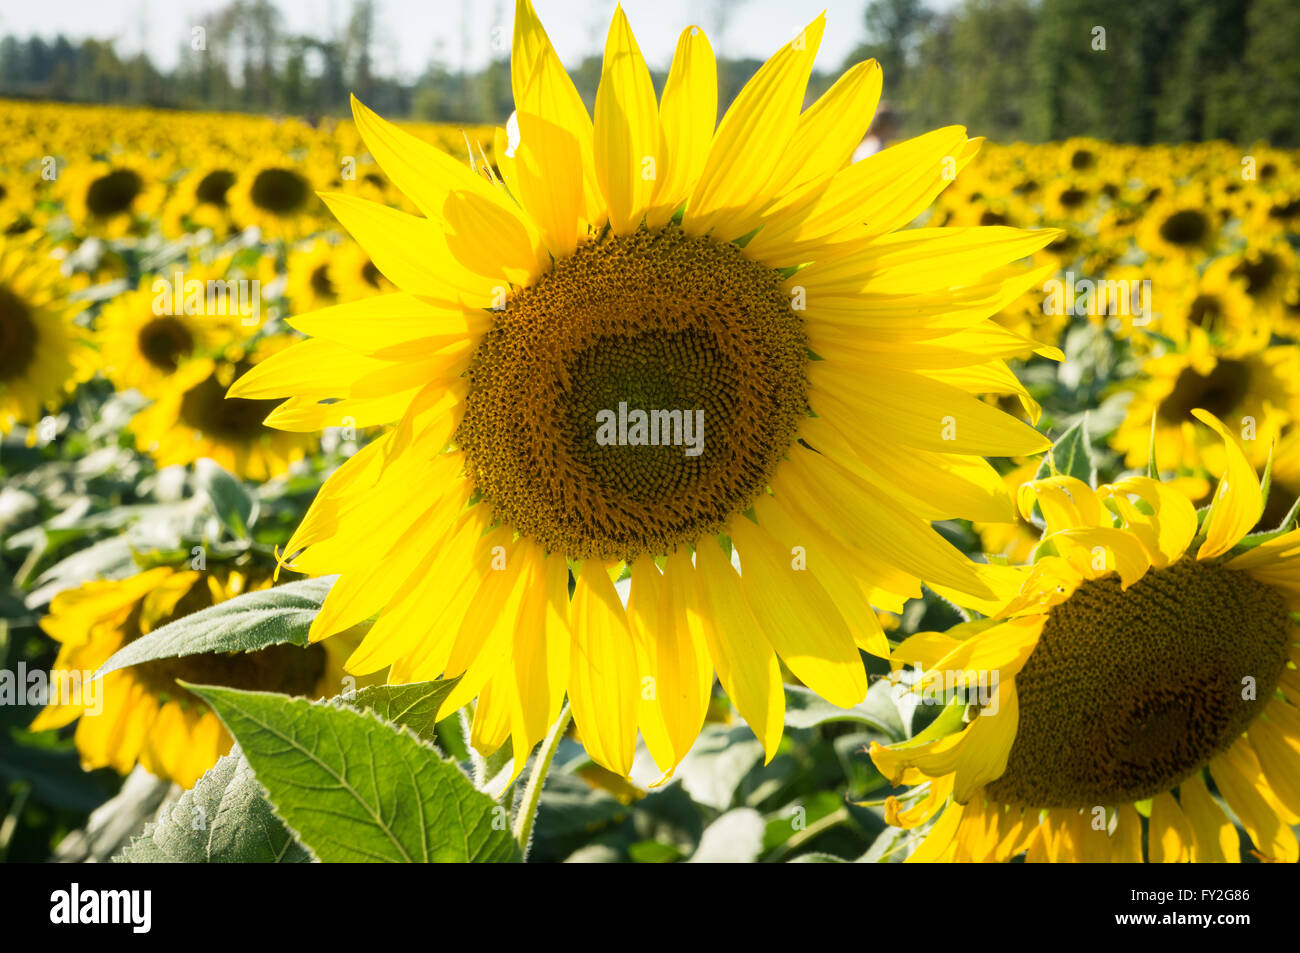 Medium close up of sunflower with field surrounding. Stock Photo